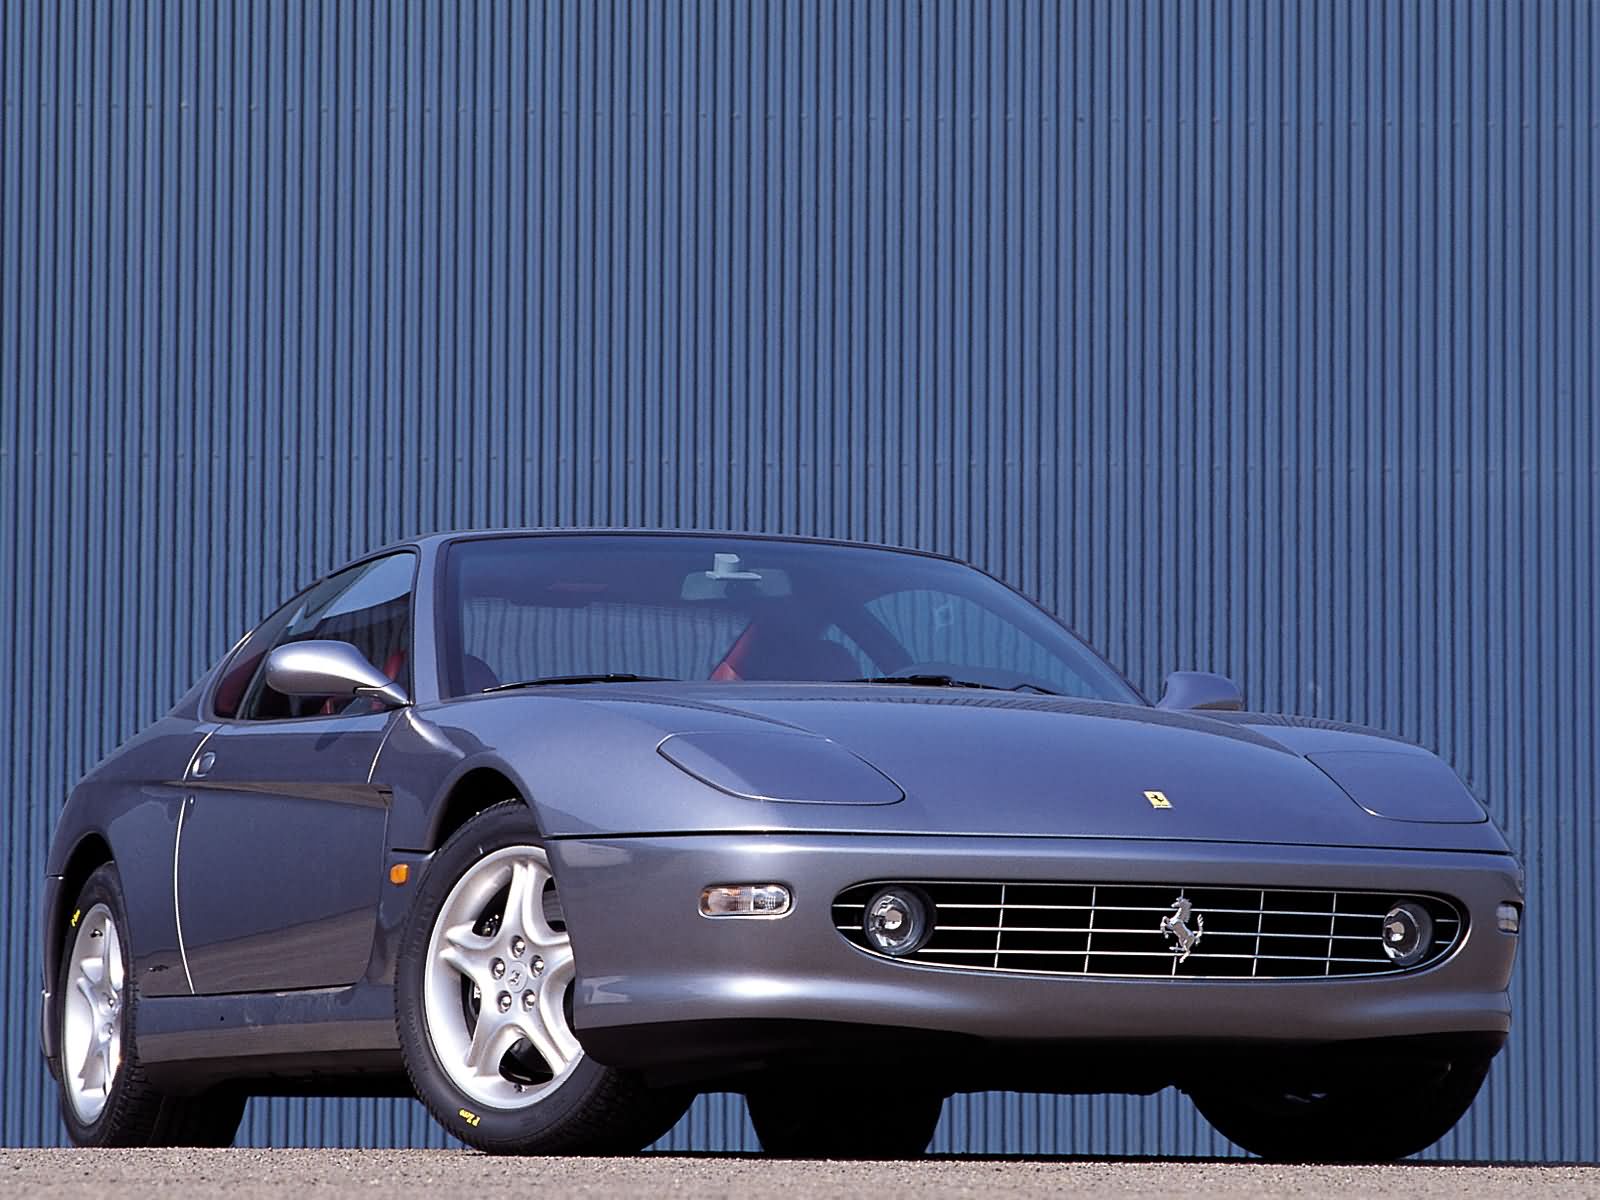 2001, Ferrari, 456 m, Gt, Scaglietti, Supercar, Supercars, 456, G t Wallpaper